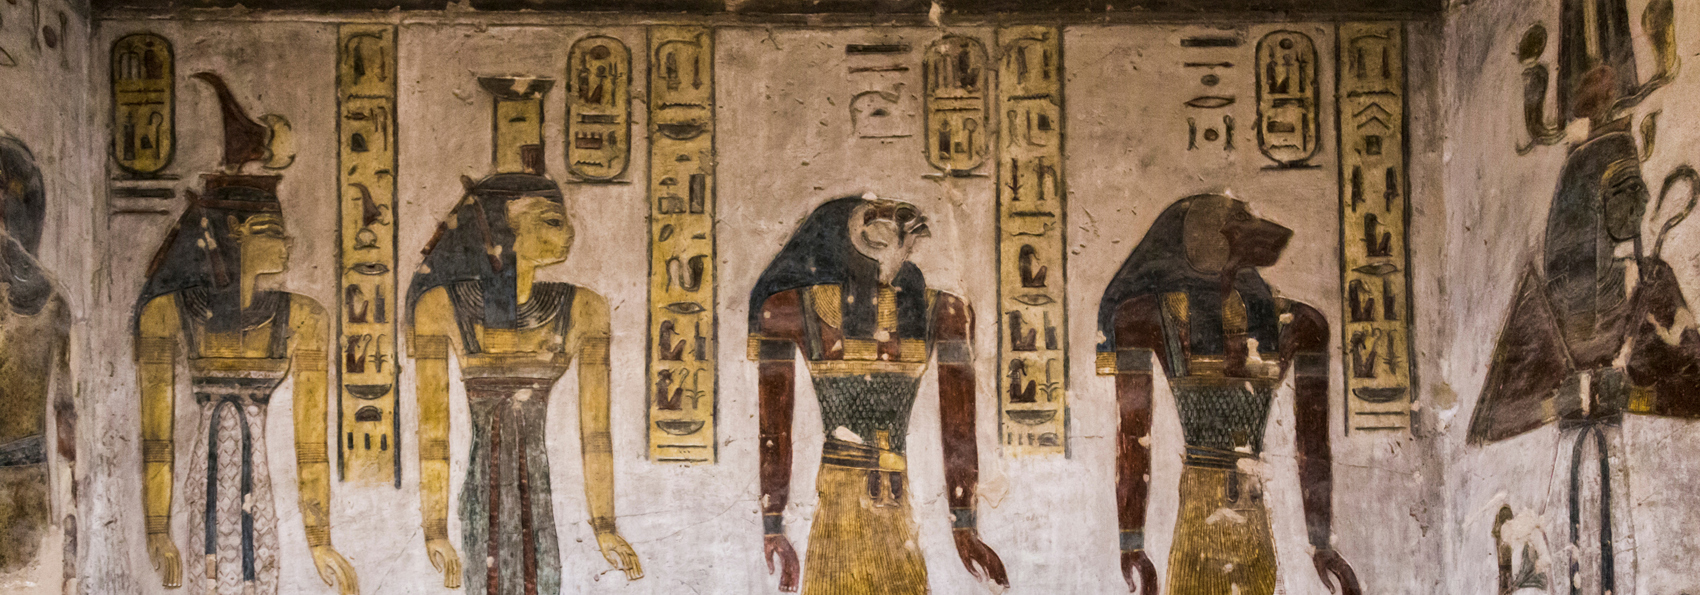 egypten - Luxor_hatshepsut_templet_02